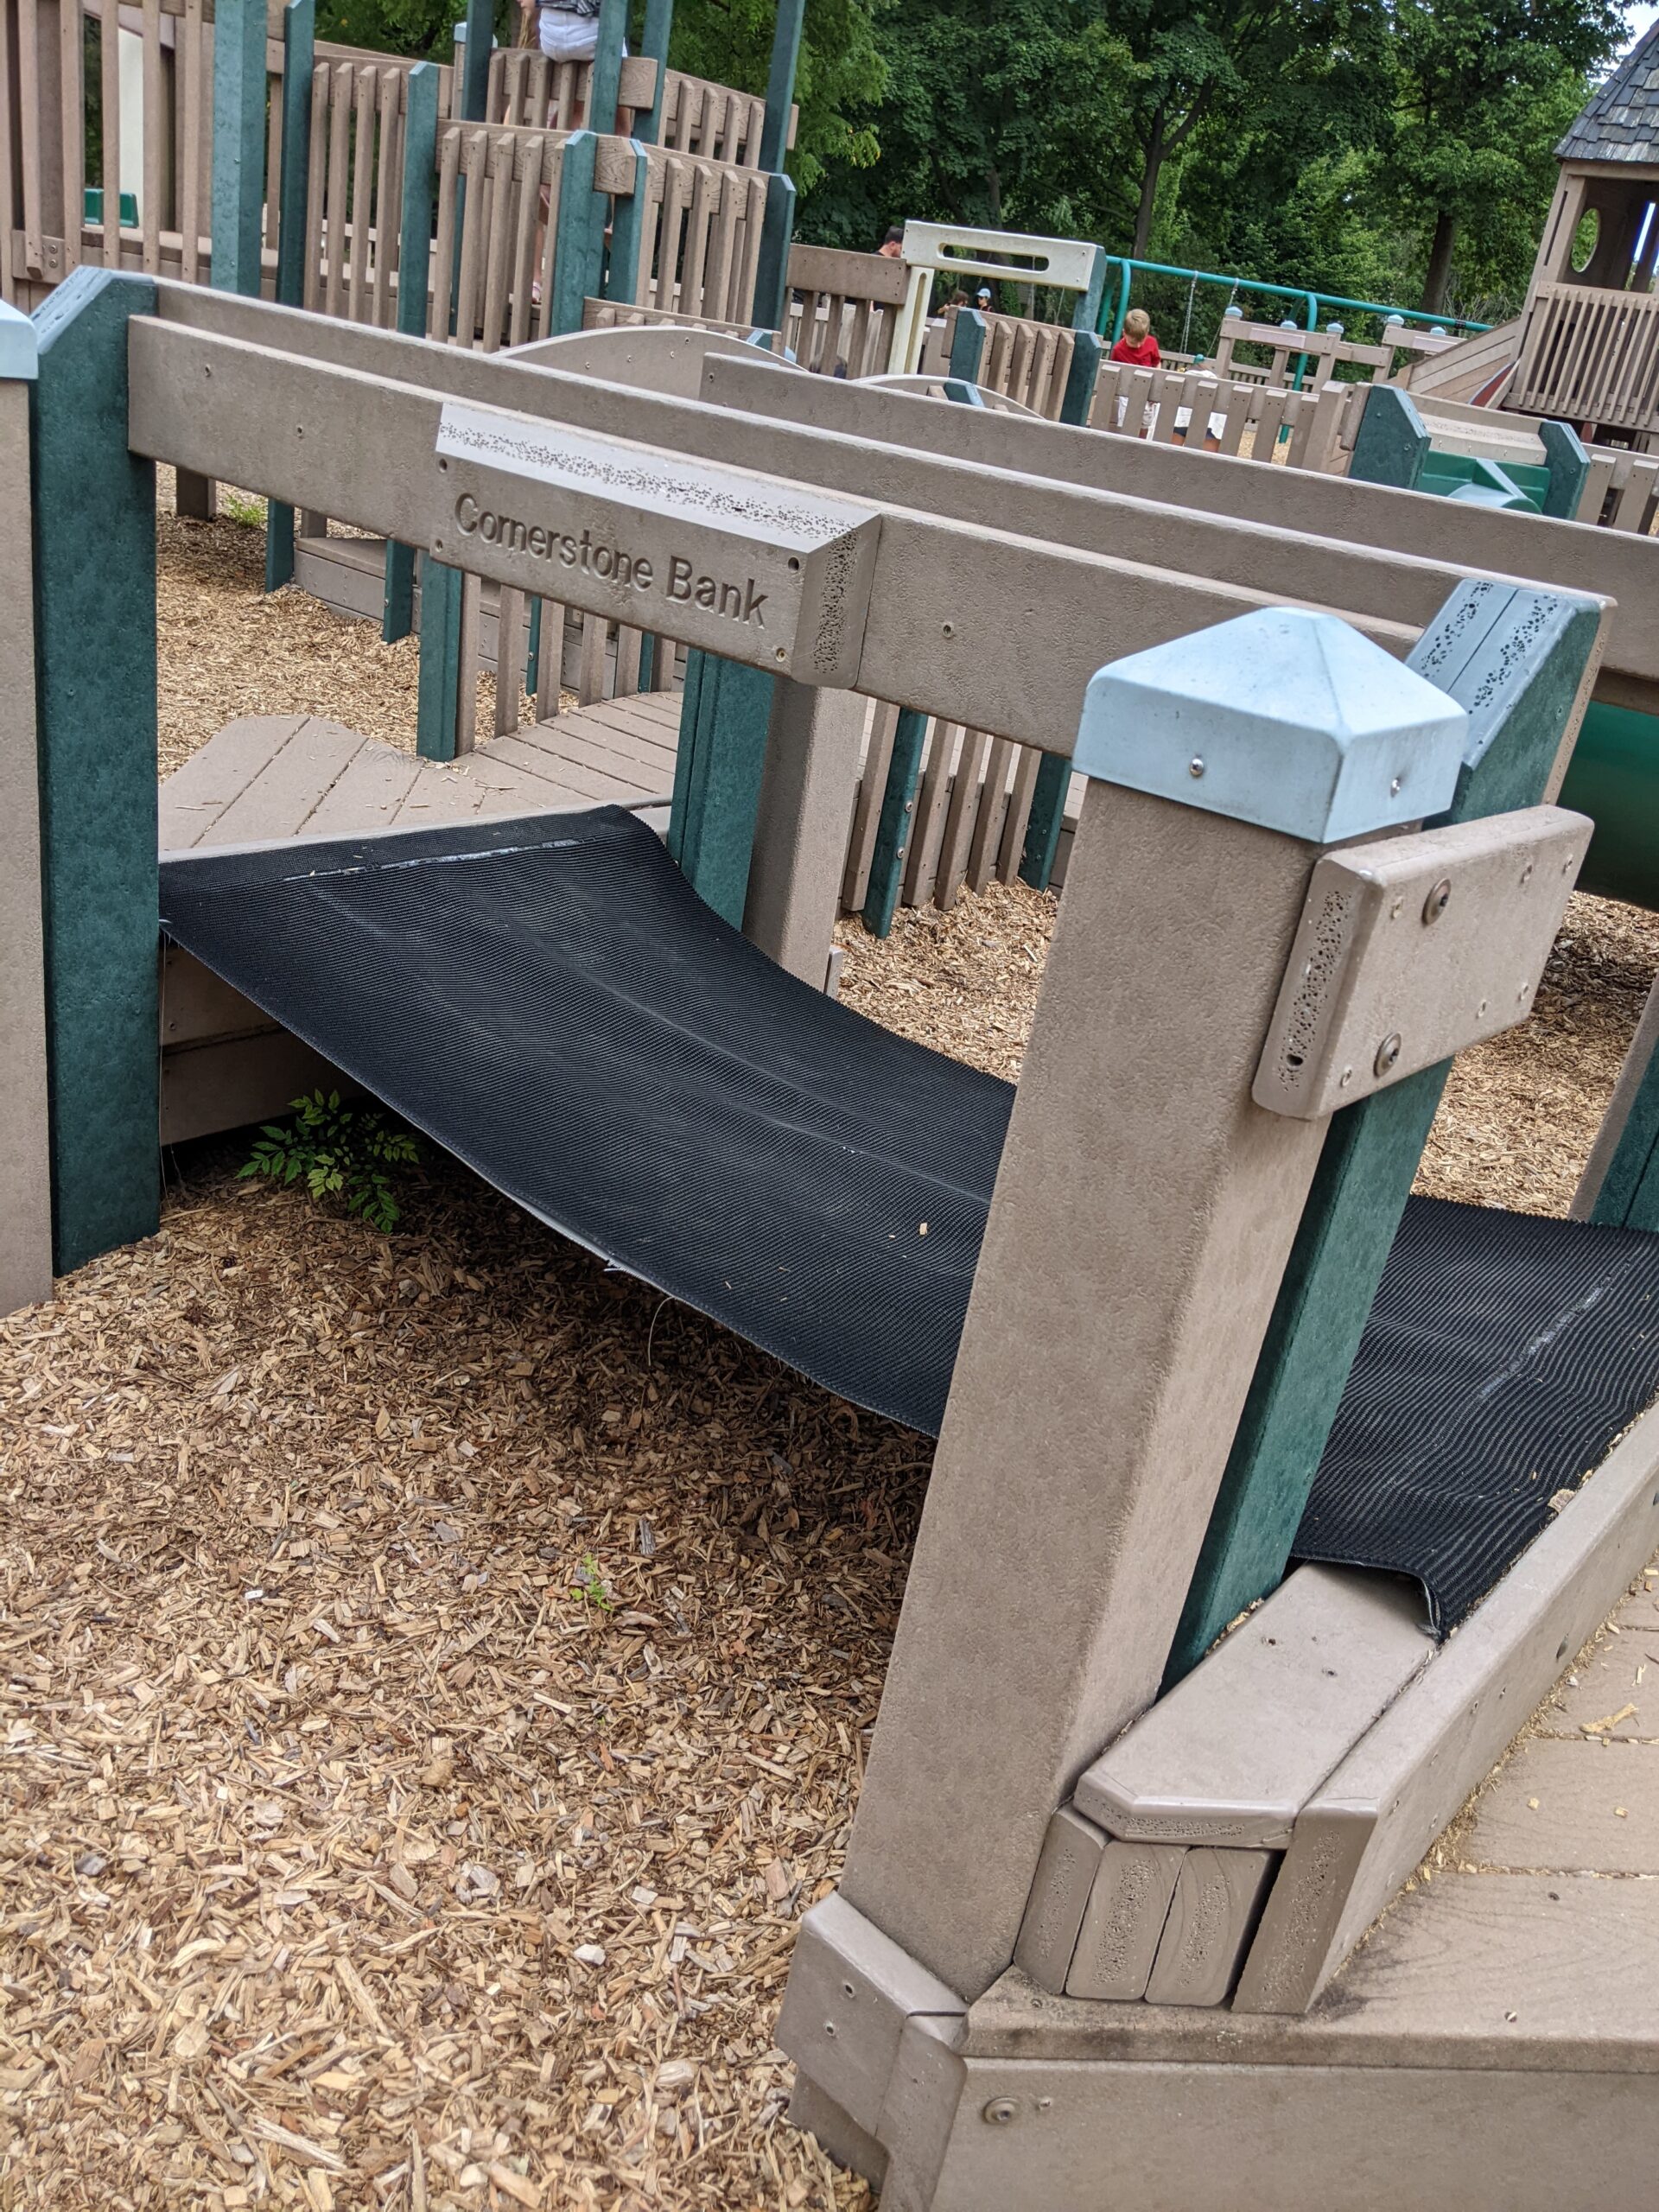 Frank Fullerton Memorial Park Playground in Moorestown NJ - FEATURES - bouncy bridge